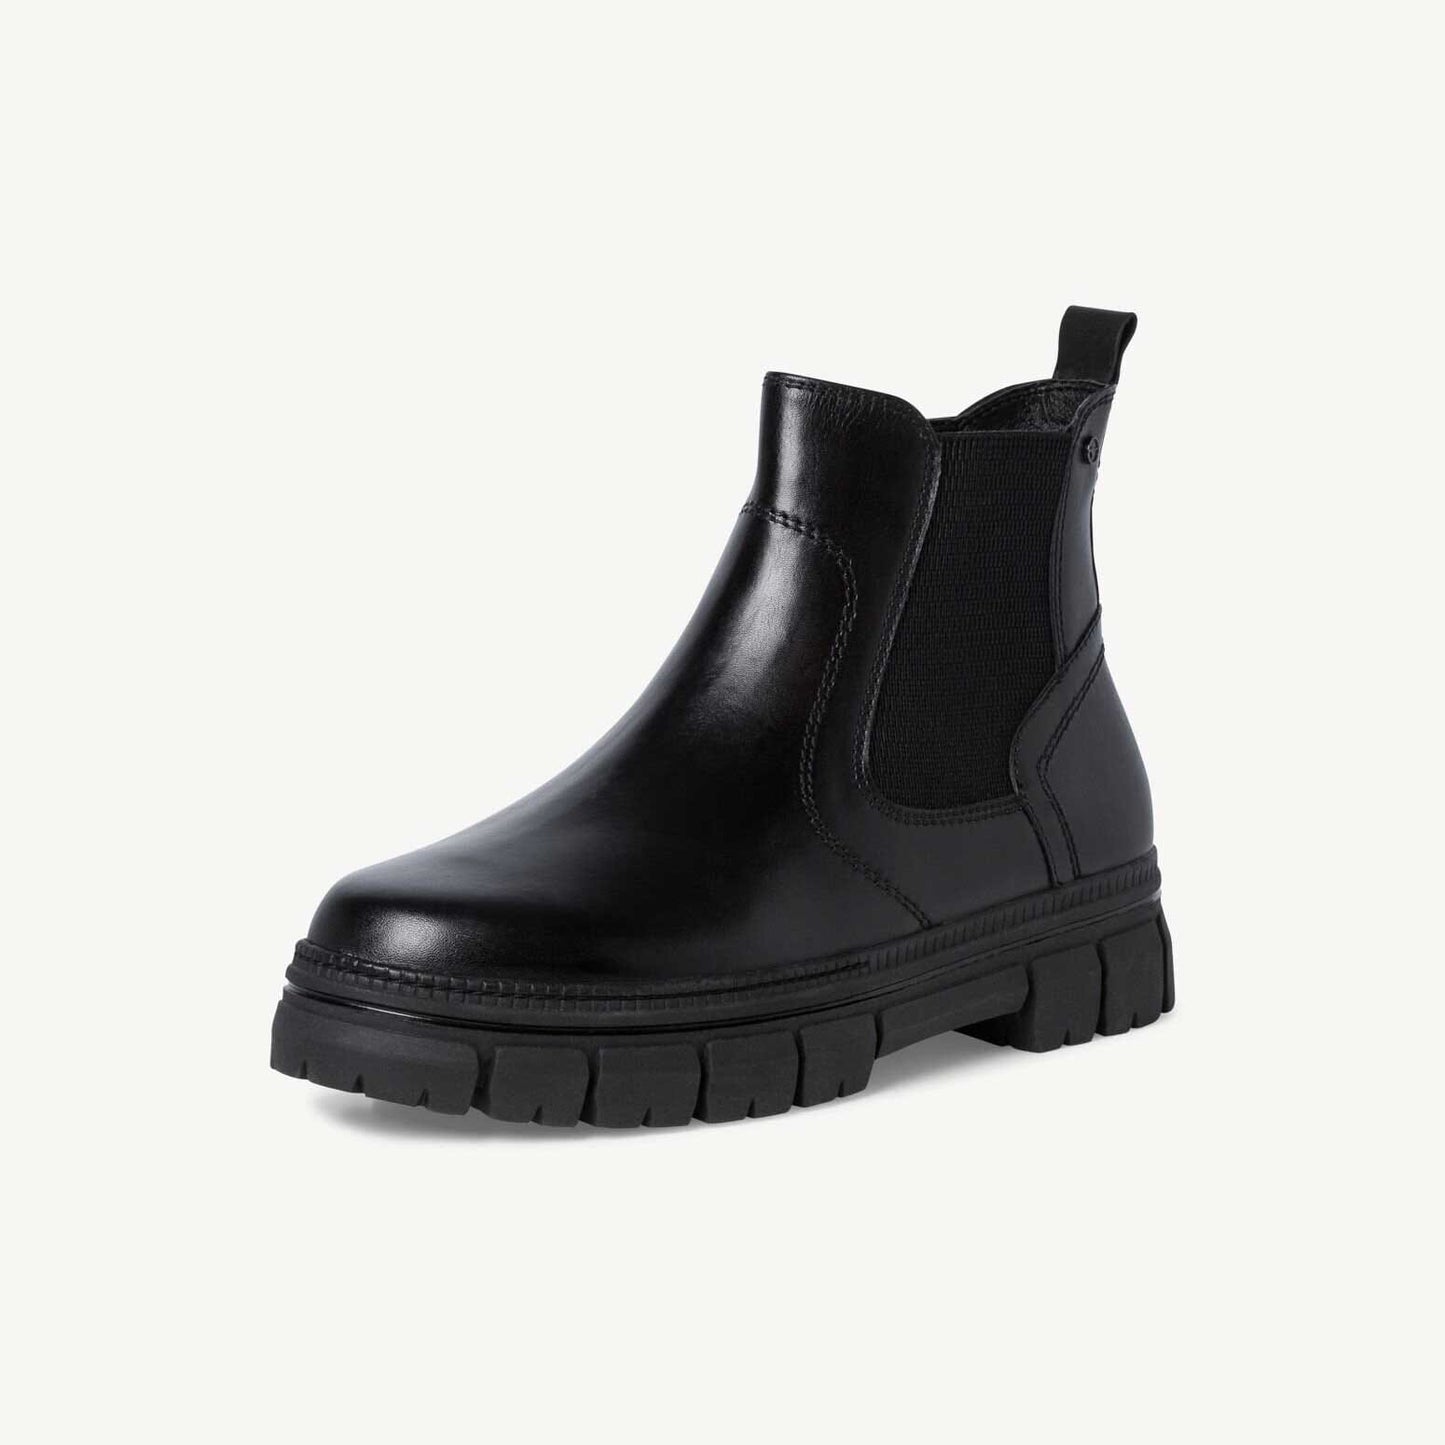 Tamaris Unisex Comfort Cairns Leather Boots Unisex Shoes Shafi Pvt. Limited Black EUR 36 